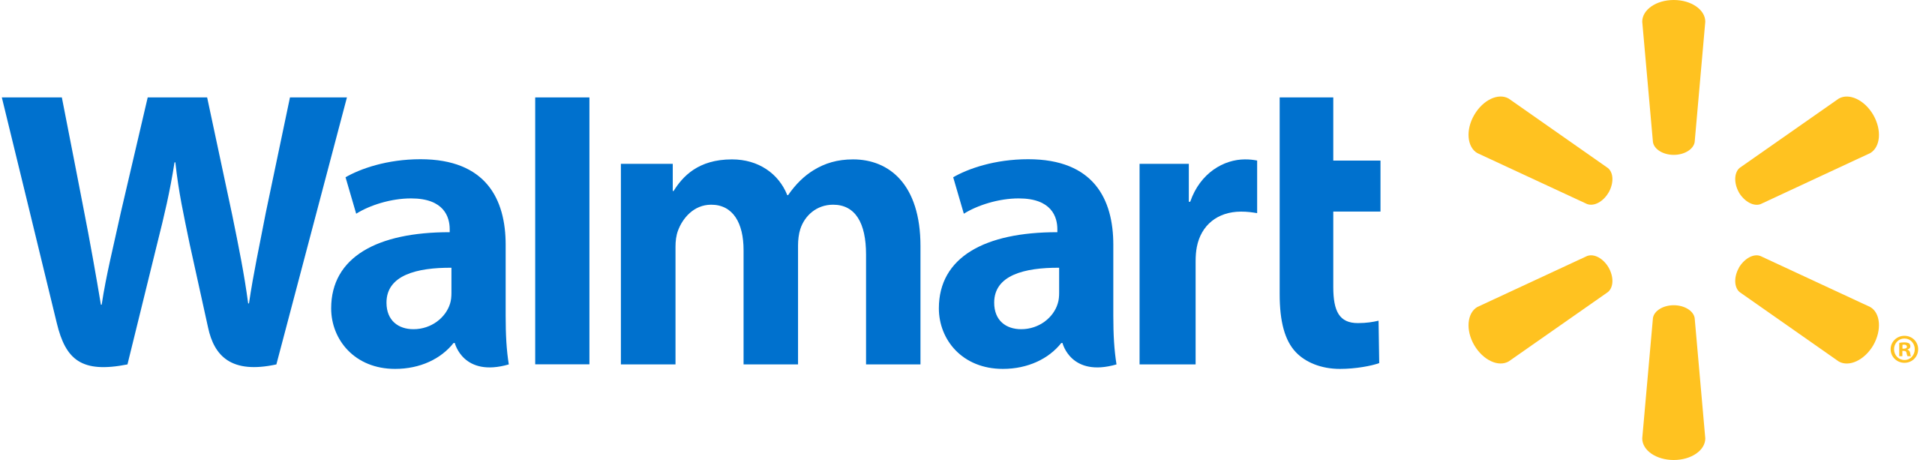 A blue logo for walmart on a black background.